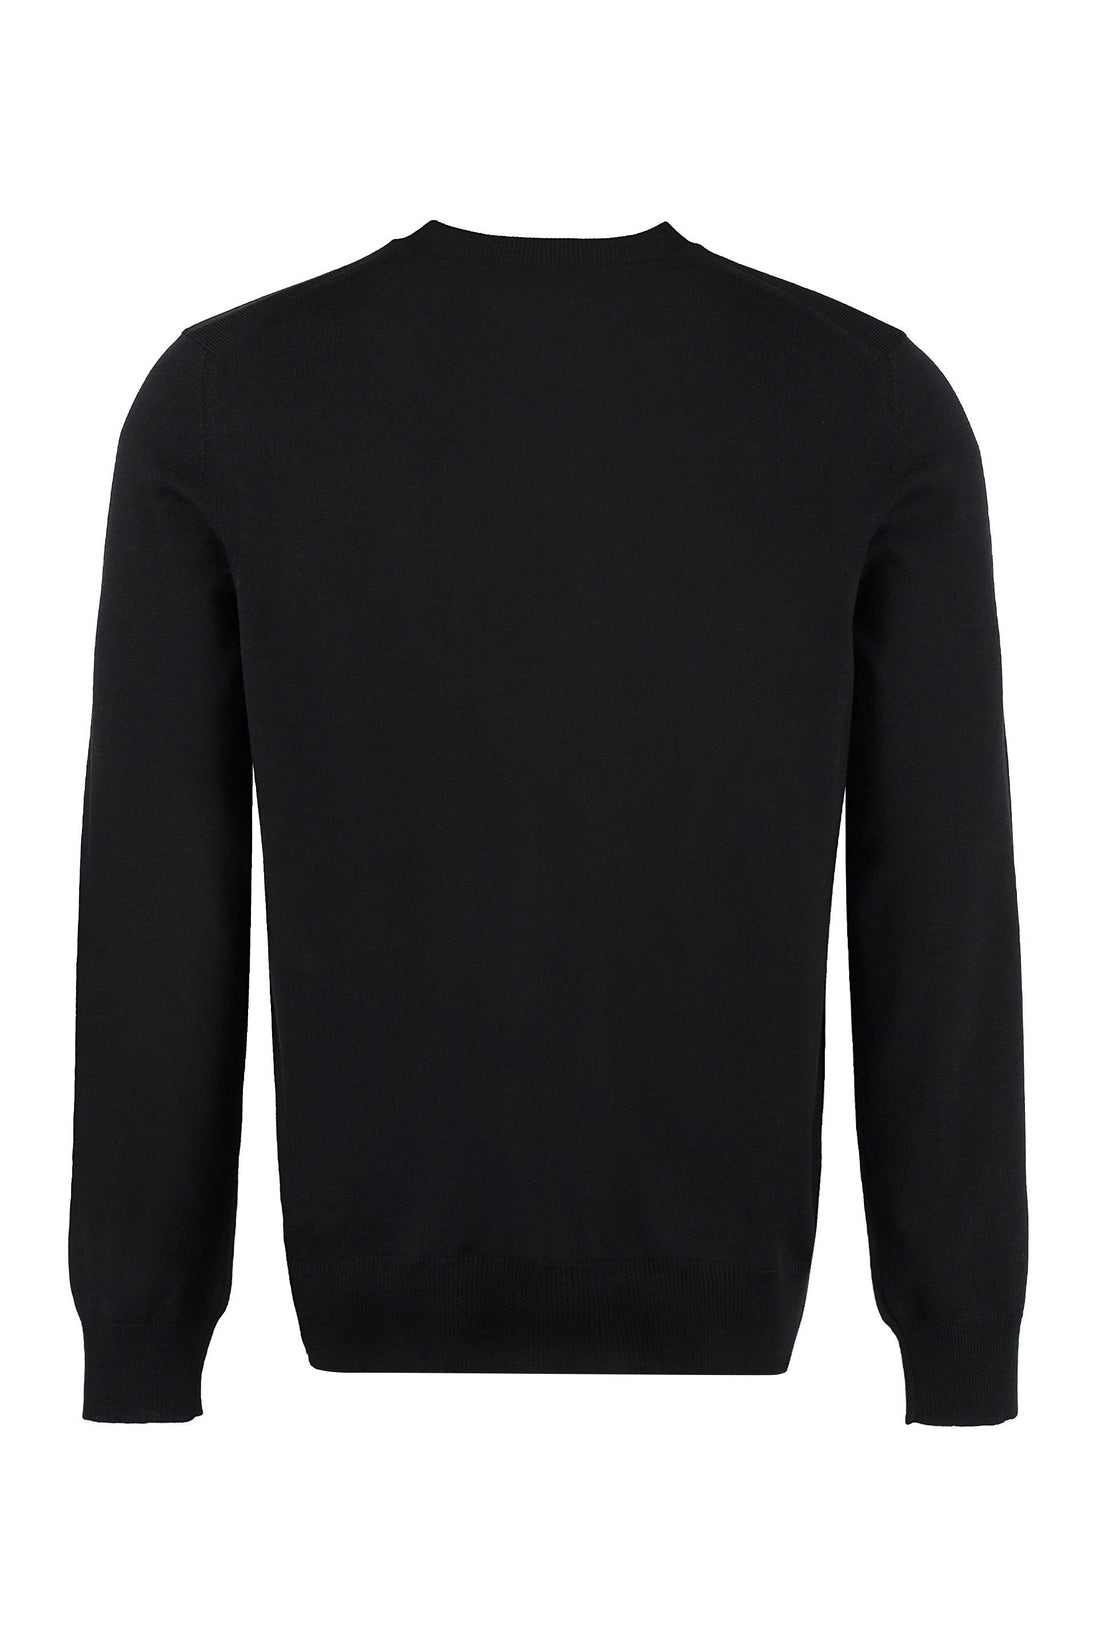 Alexander McQueen-OUTLET-SALE-Crew-neck wool sweater-ARCHIVIST